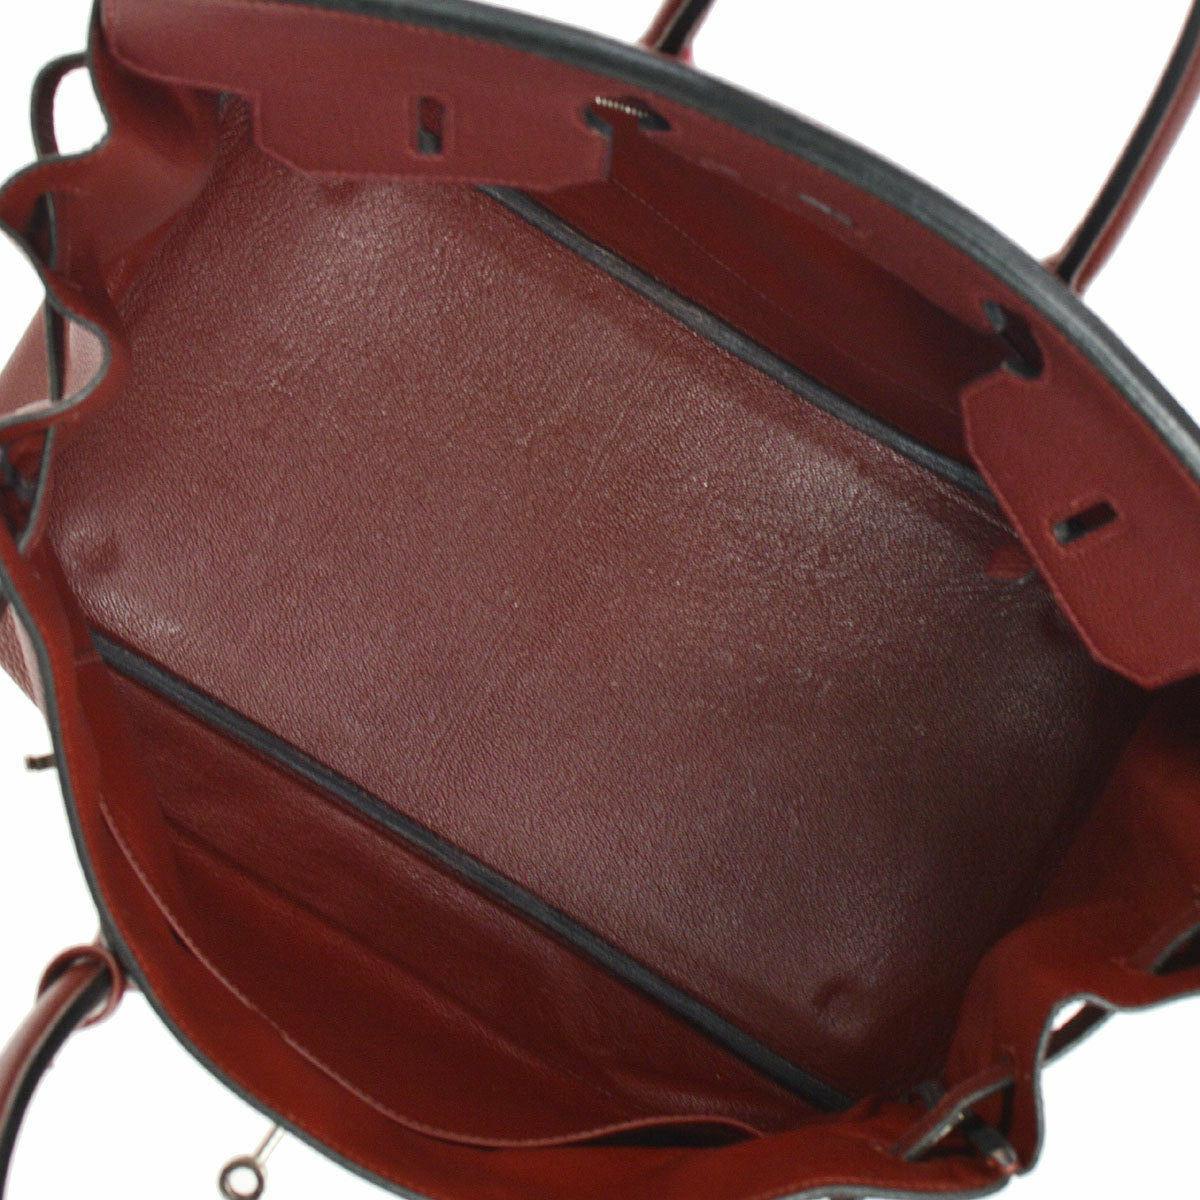 Hermes Birkin 35 Burgundy Leather Top Carryall Handle Satchel Travel Tote Bag 1